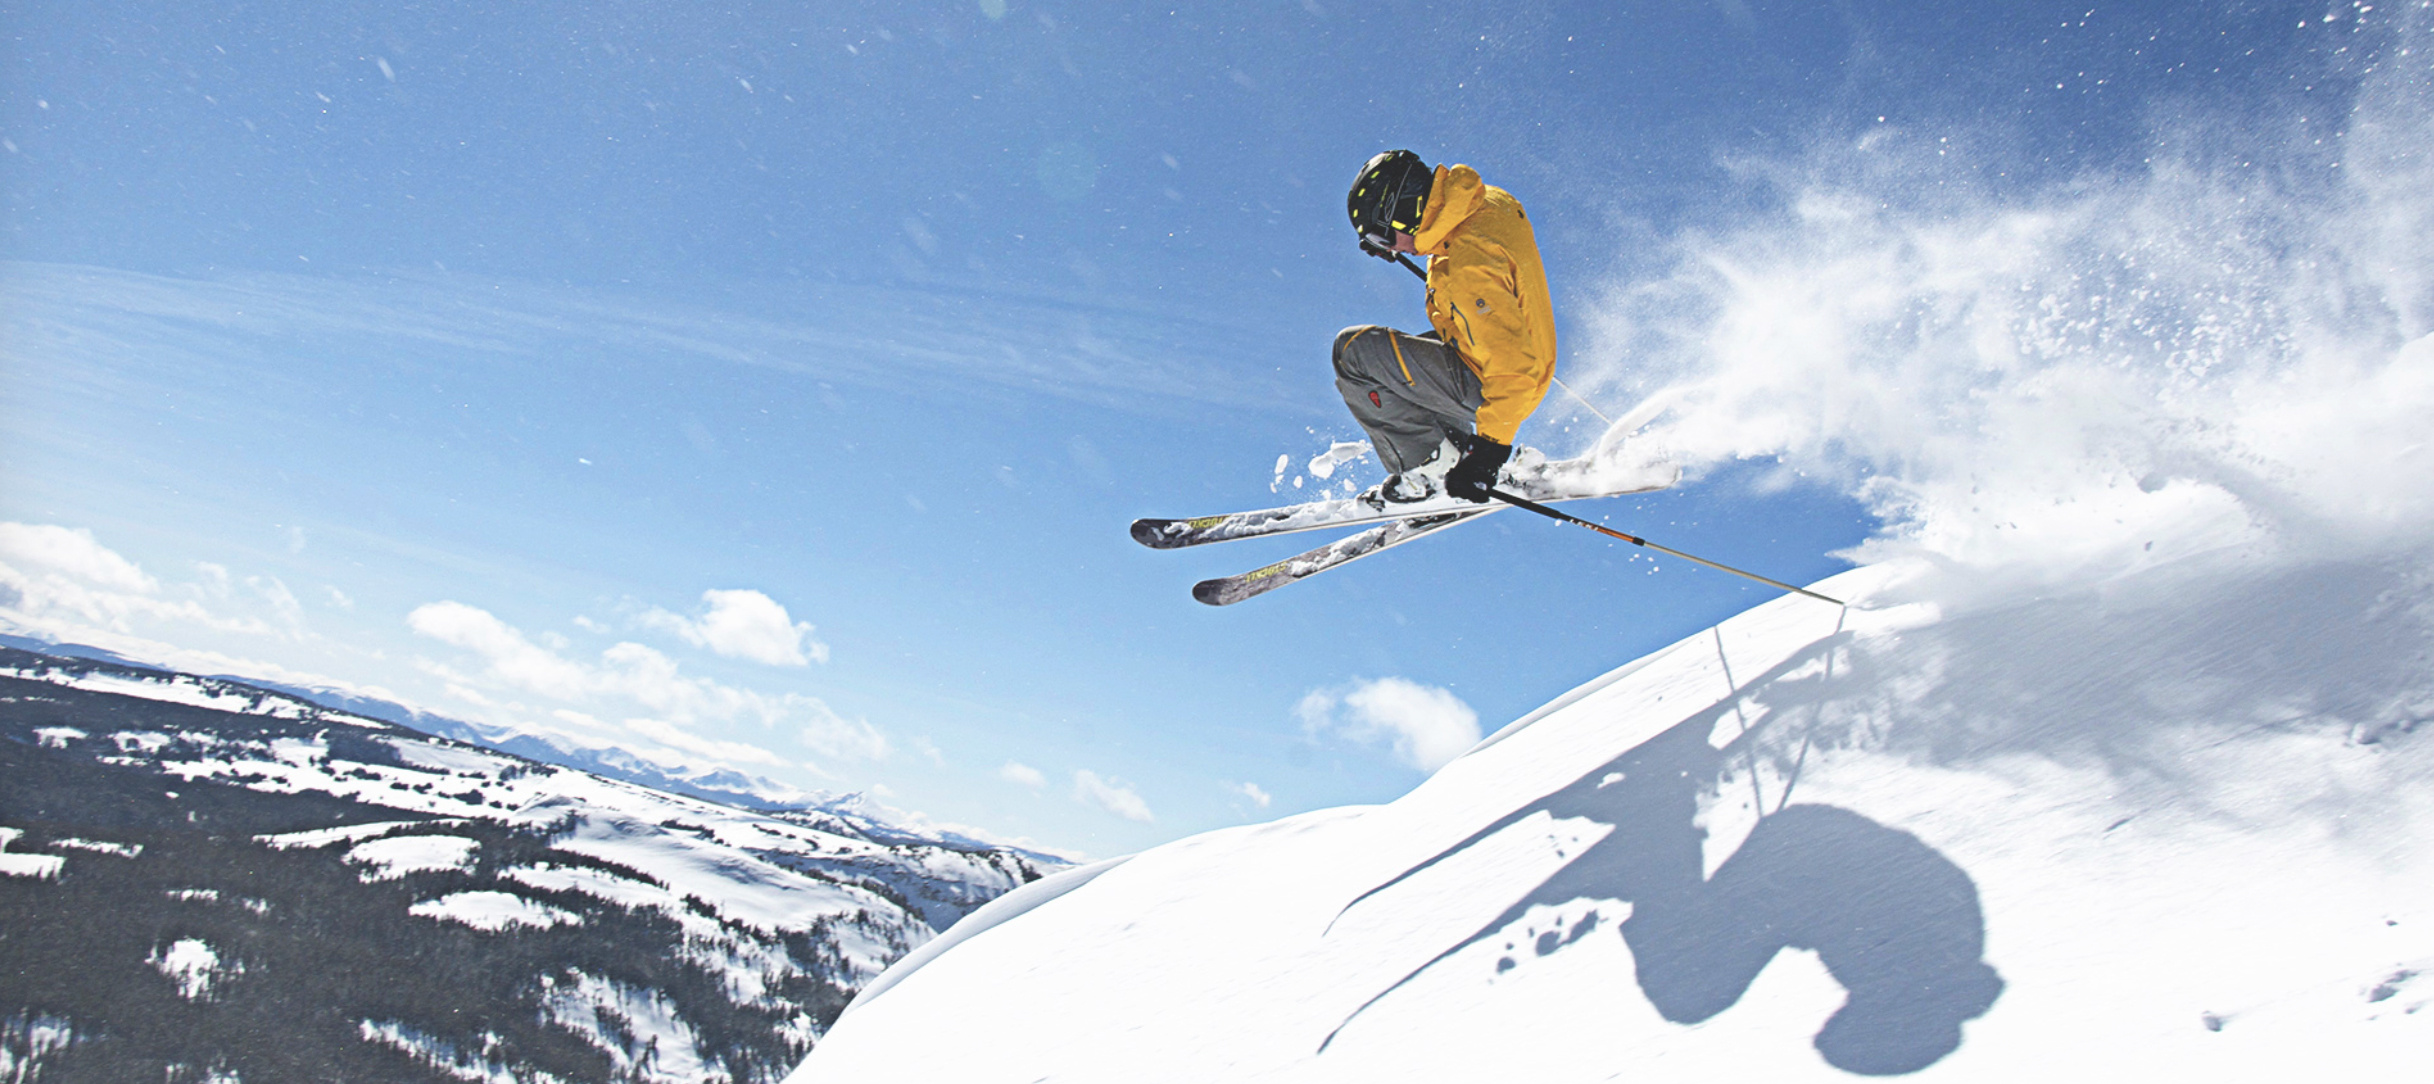 Freestyle Skiing, First ski turns, Start of the season, Winter sports joy, 2440x1090 Dual Screen Desktop